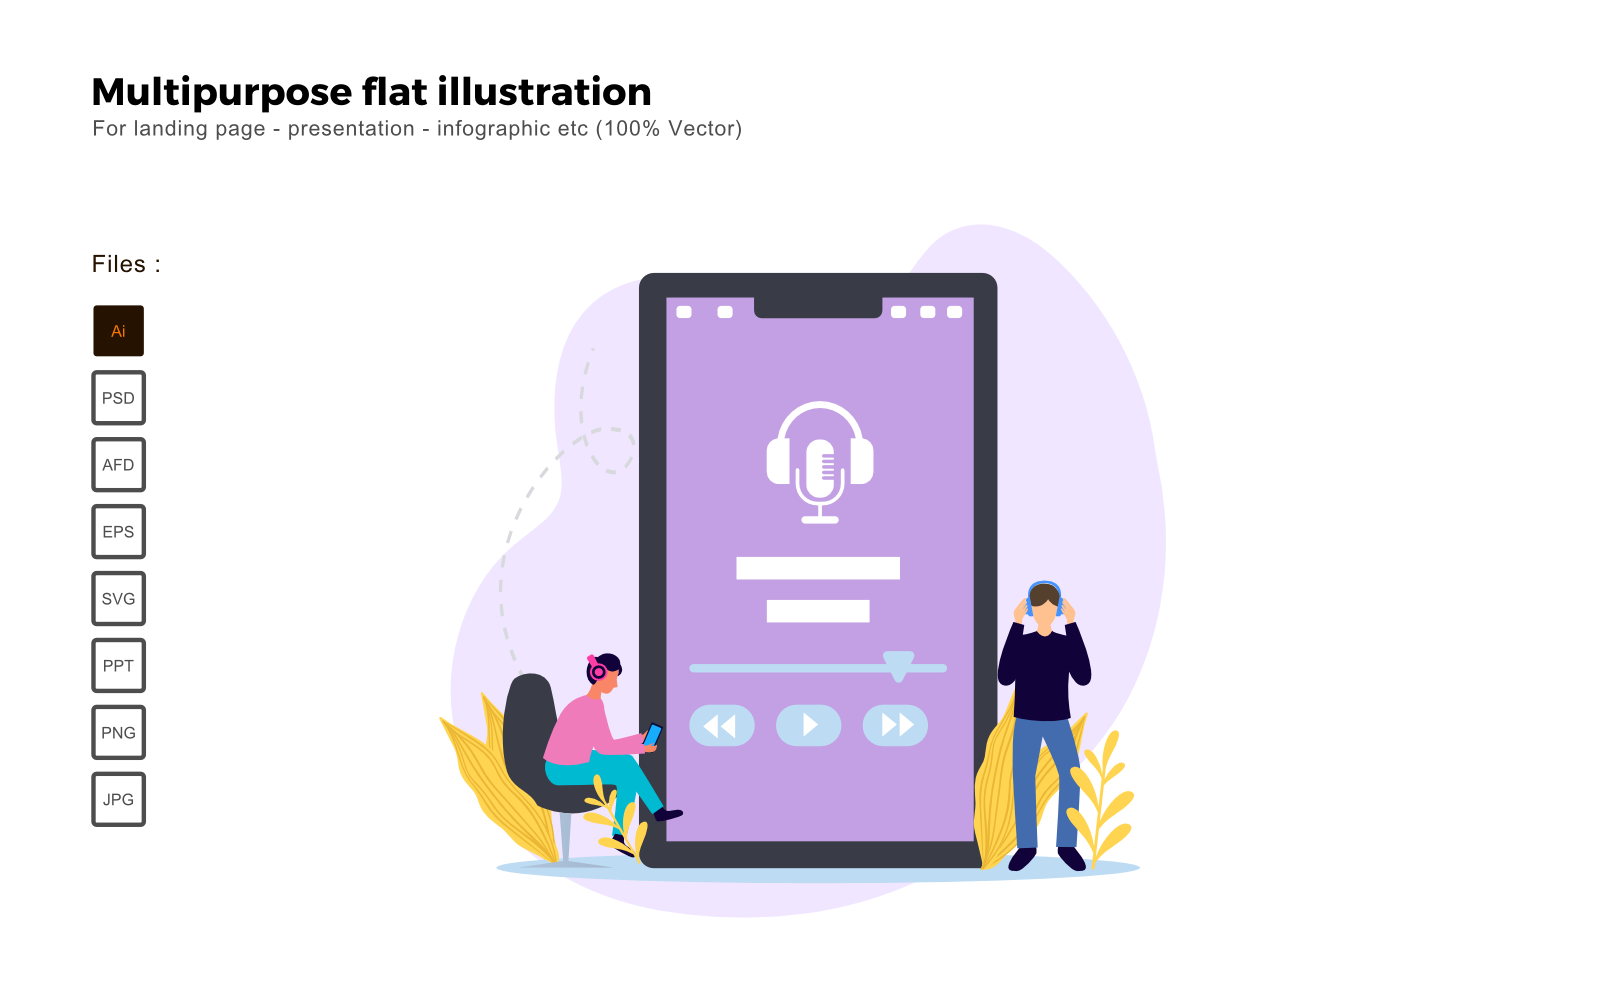 Multipurpose Flat Illustration Listening Podcast - Vector Image